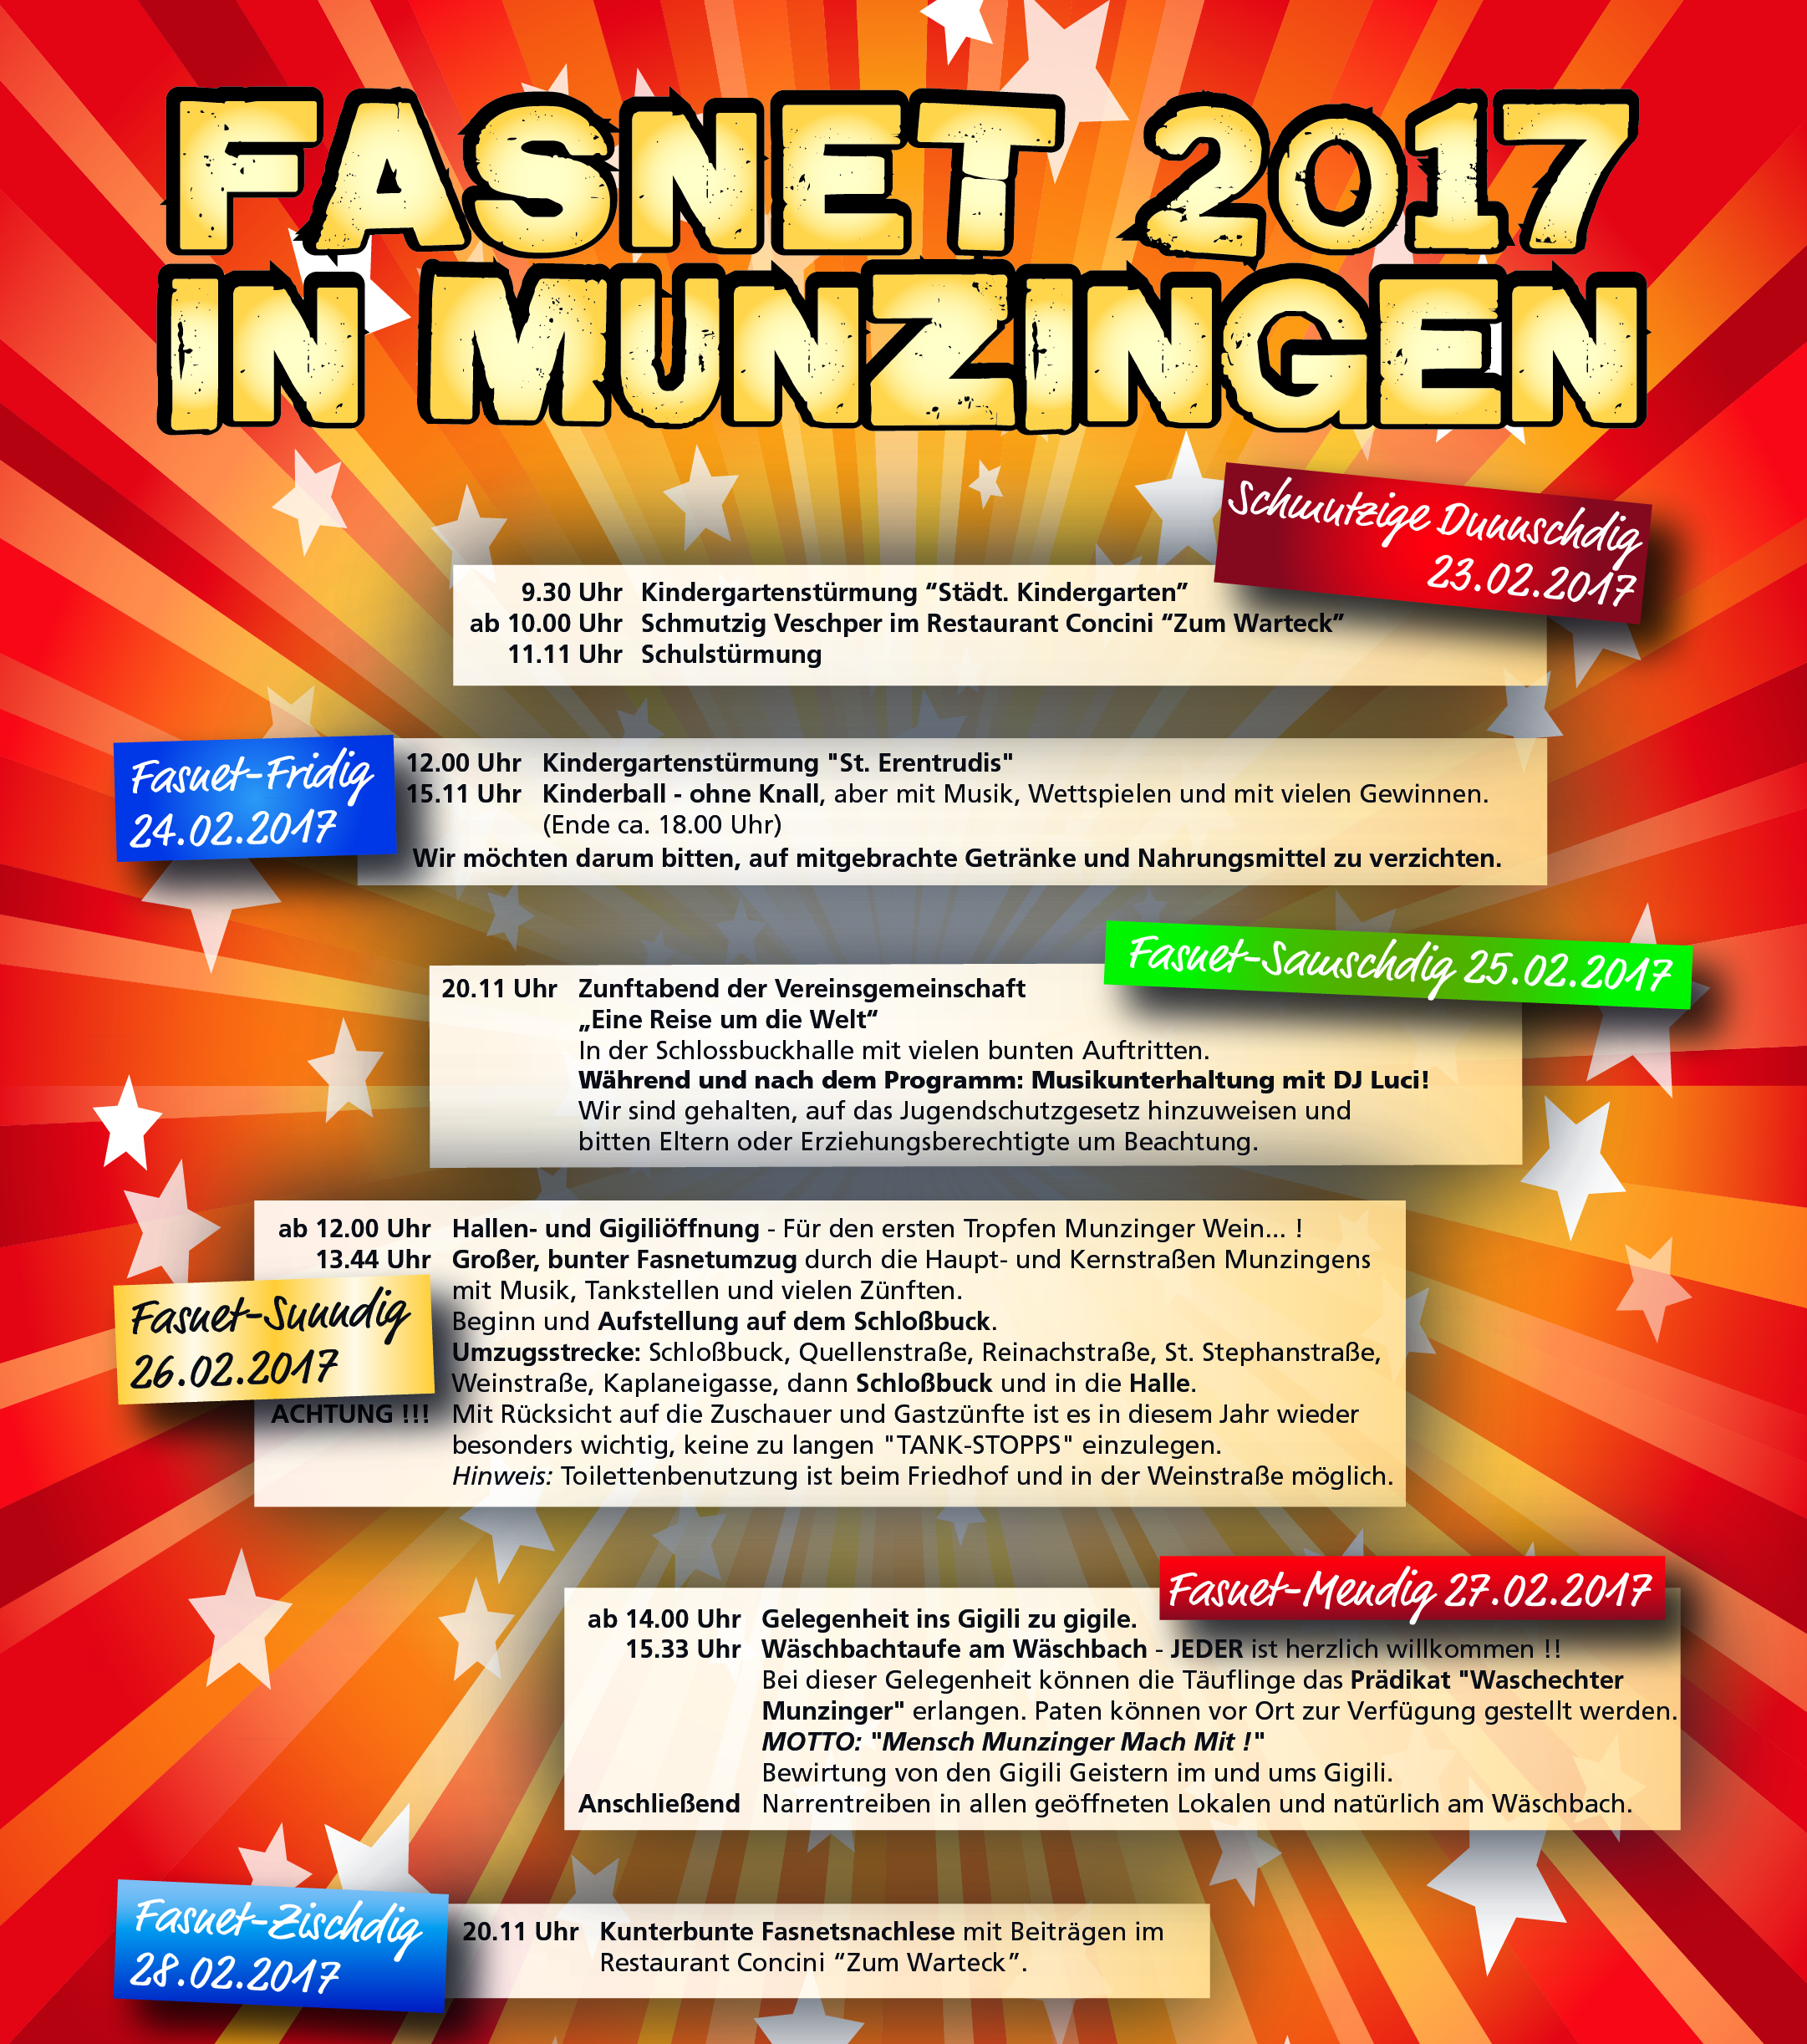 FasnetMunzingen2017-183x207mm-primo-01